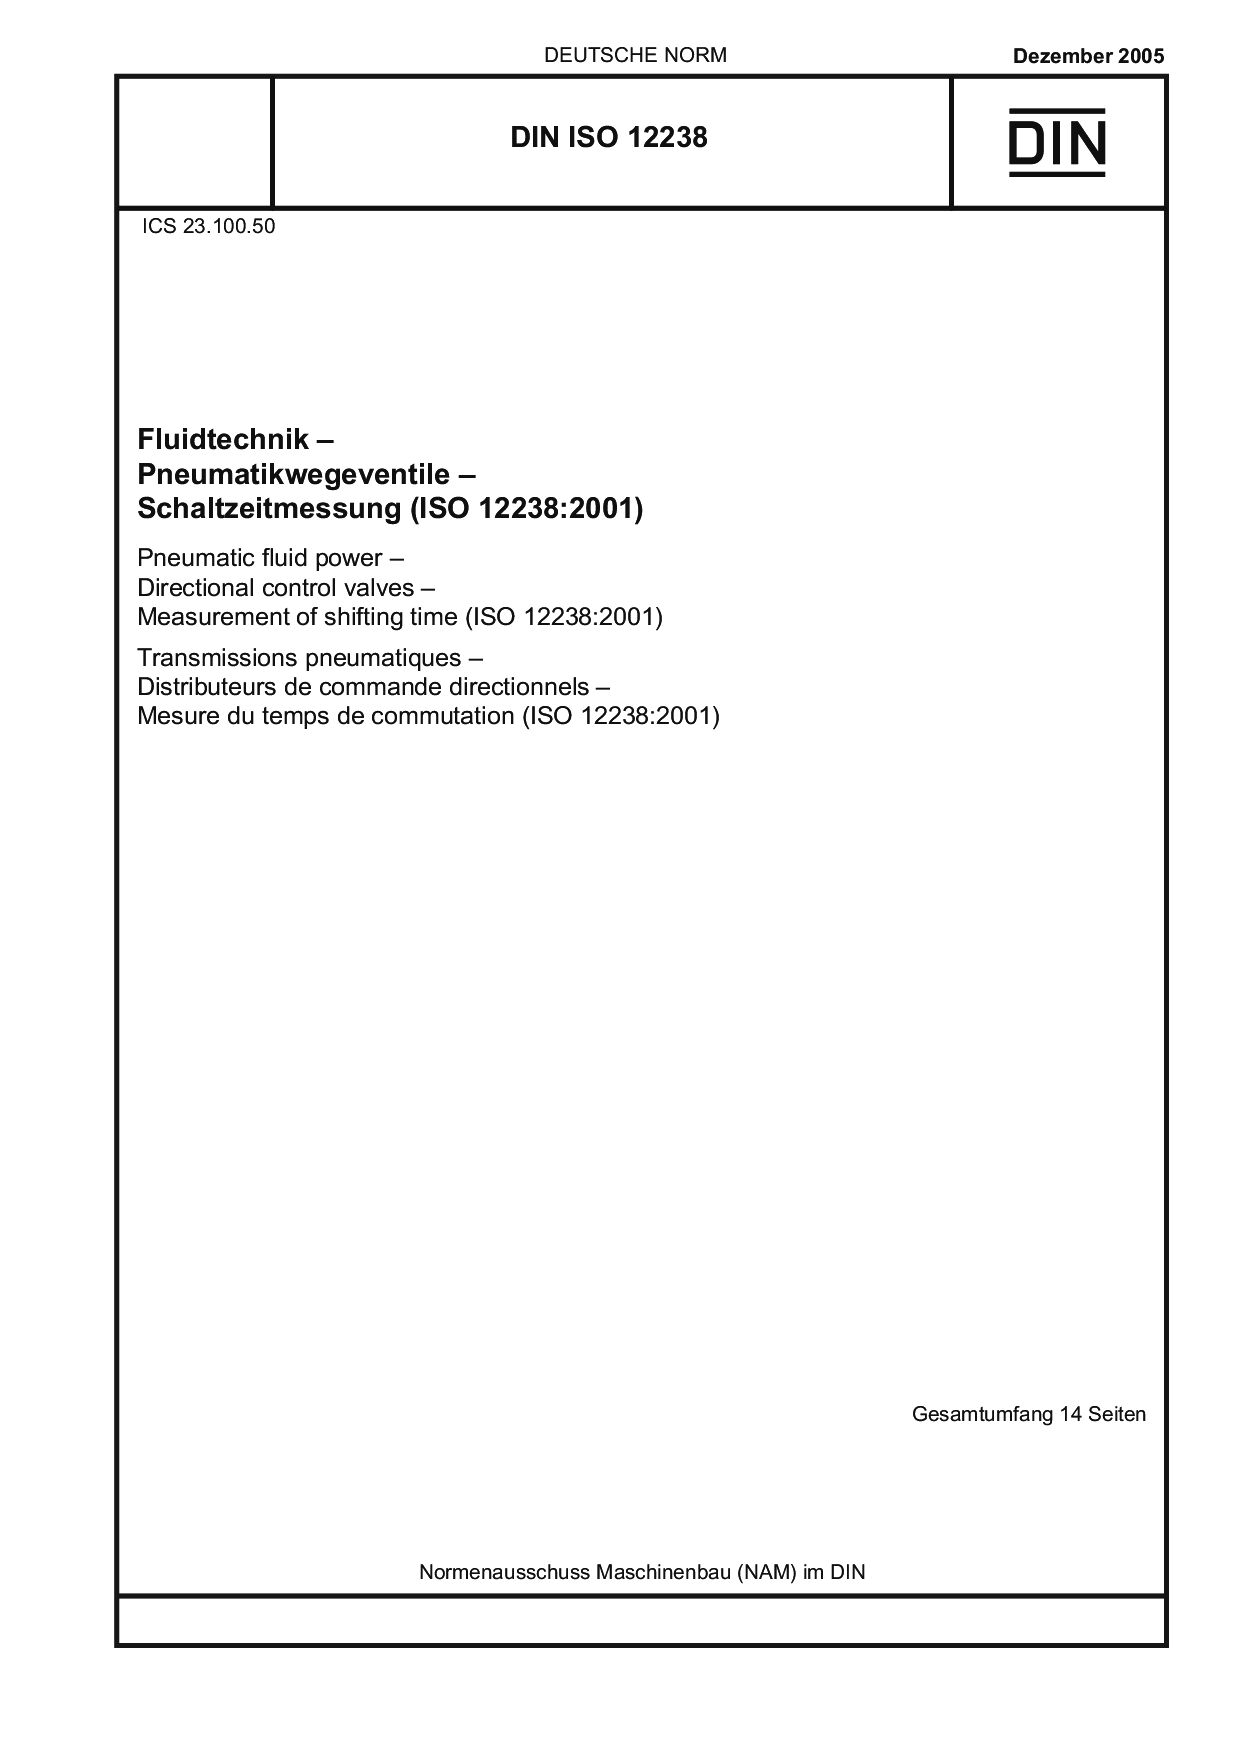 DIN ISO 12238:2005